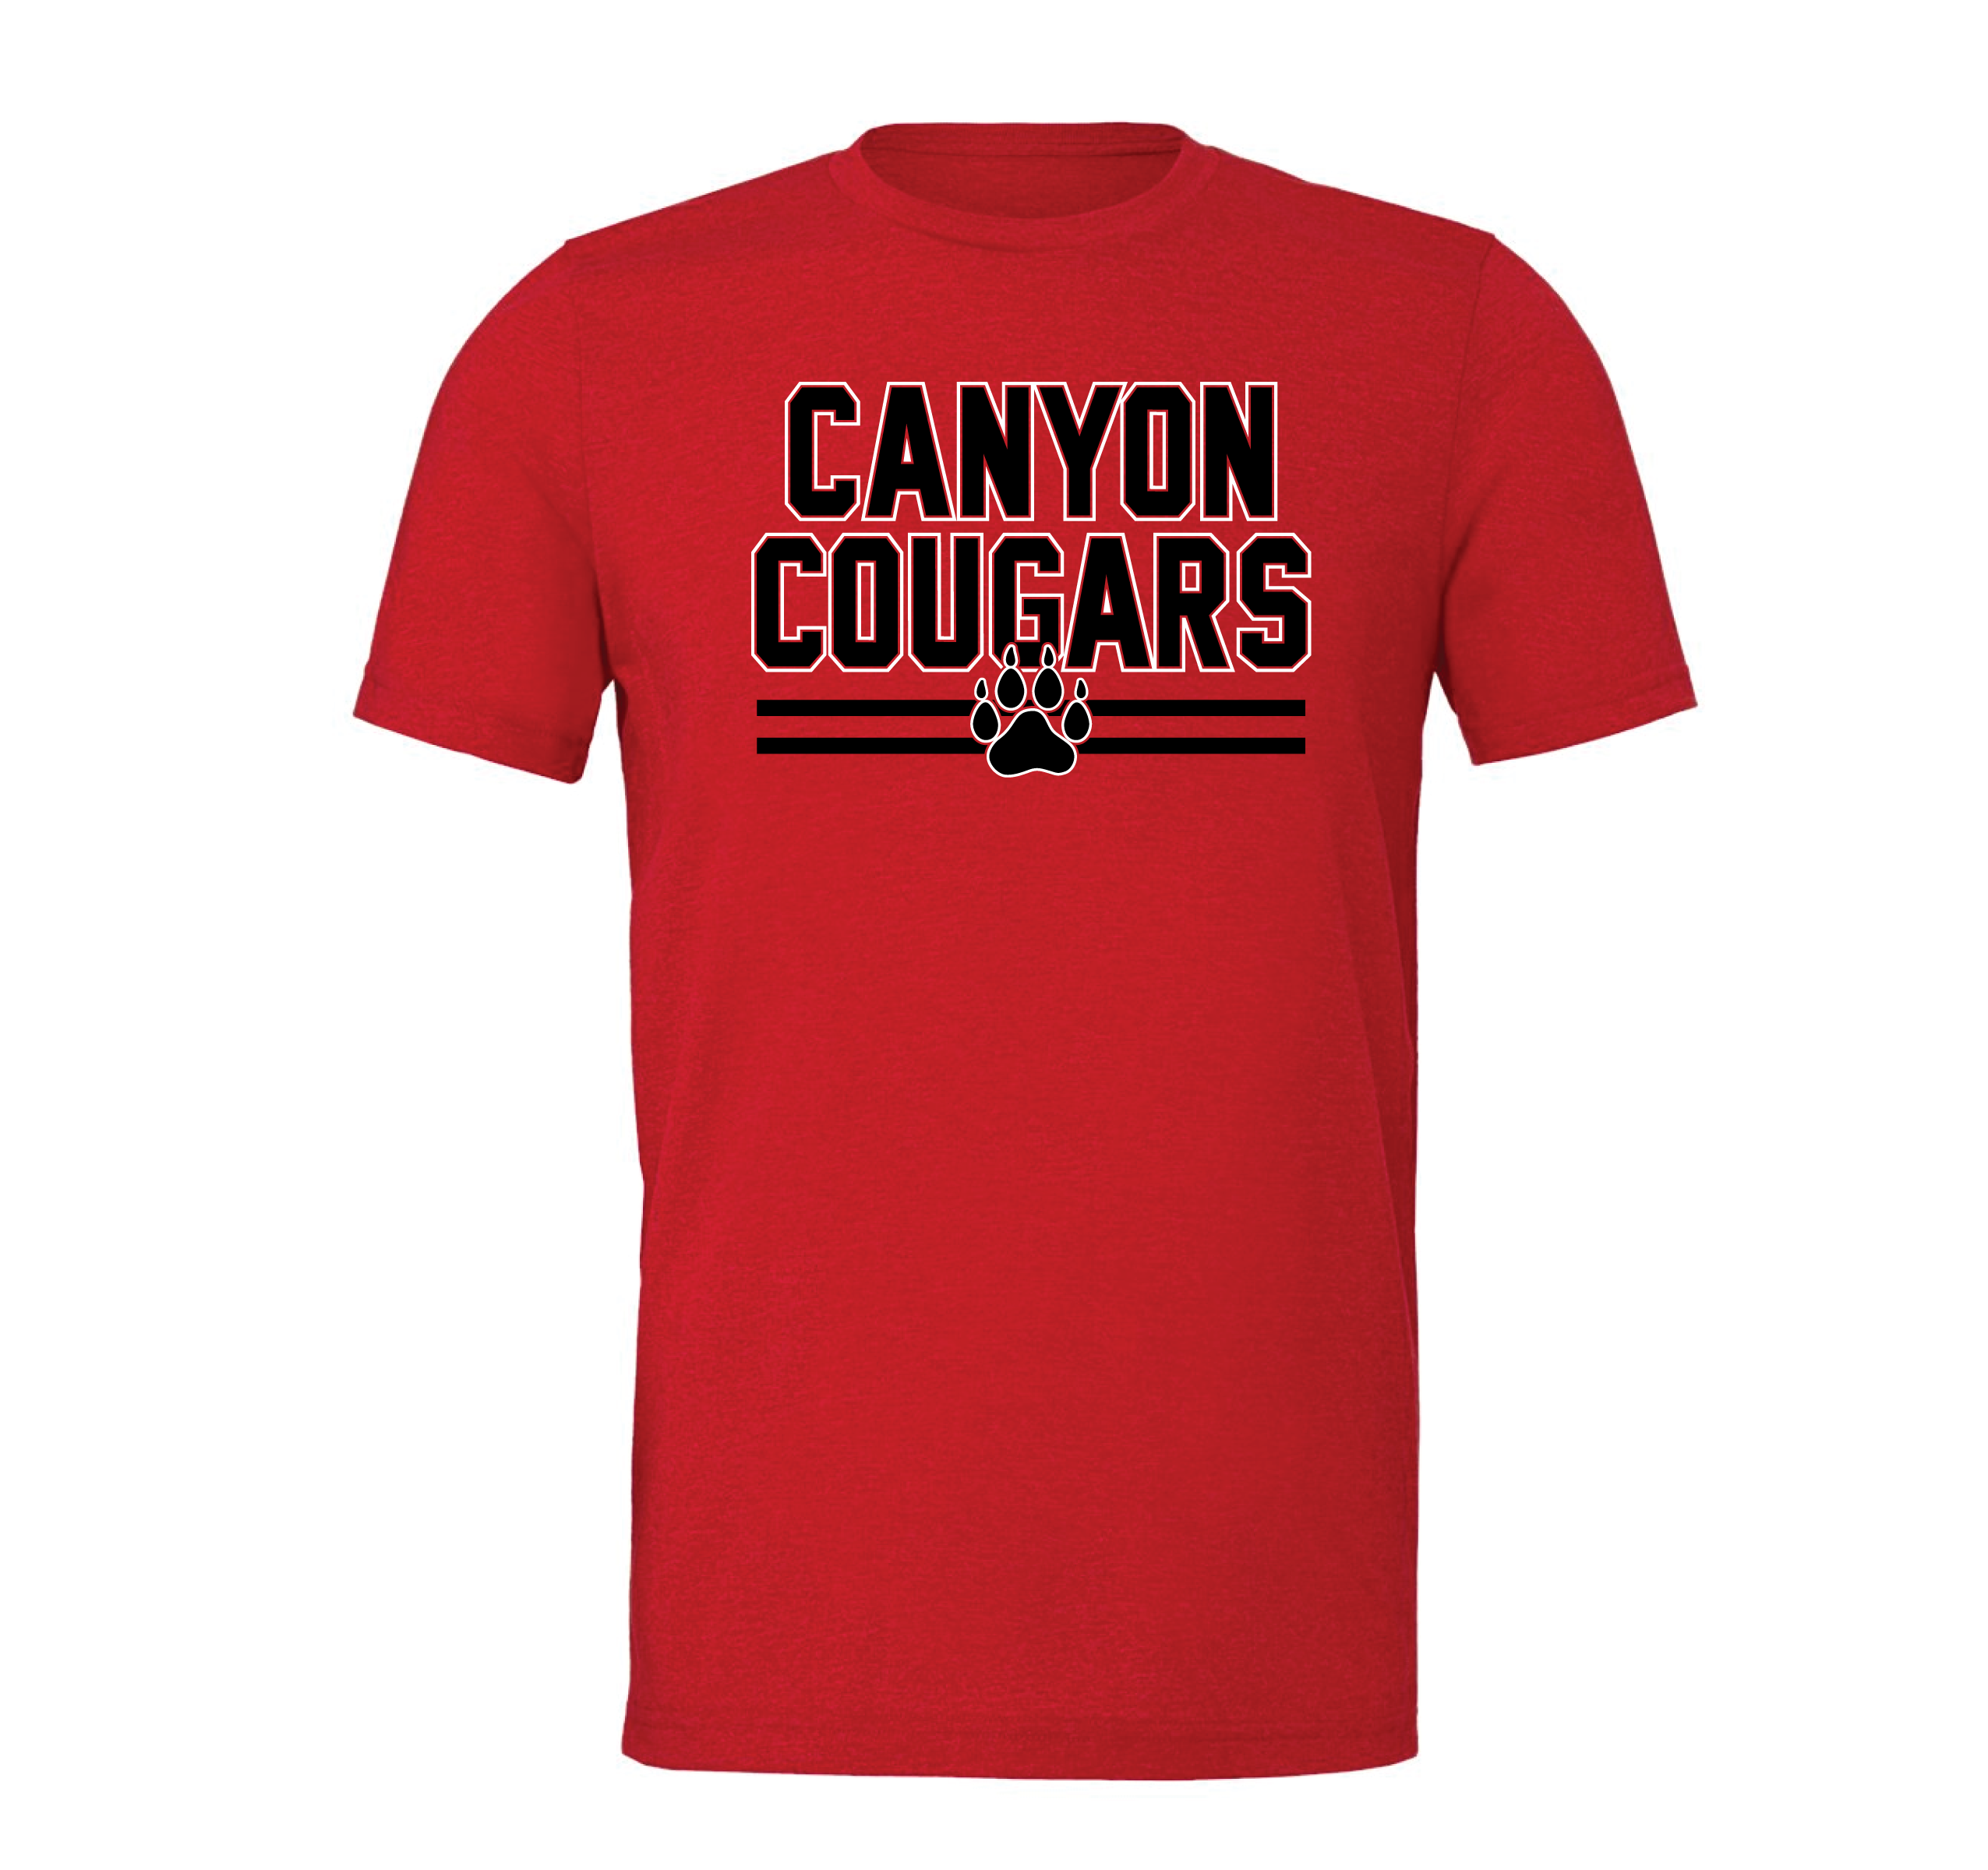 Canyon Cougars Tee